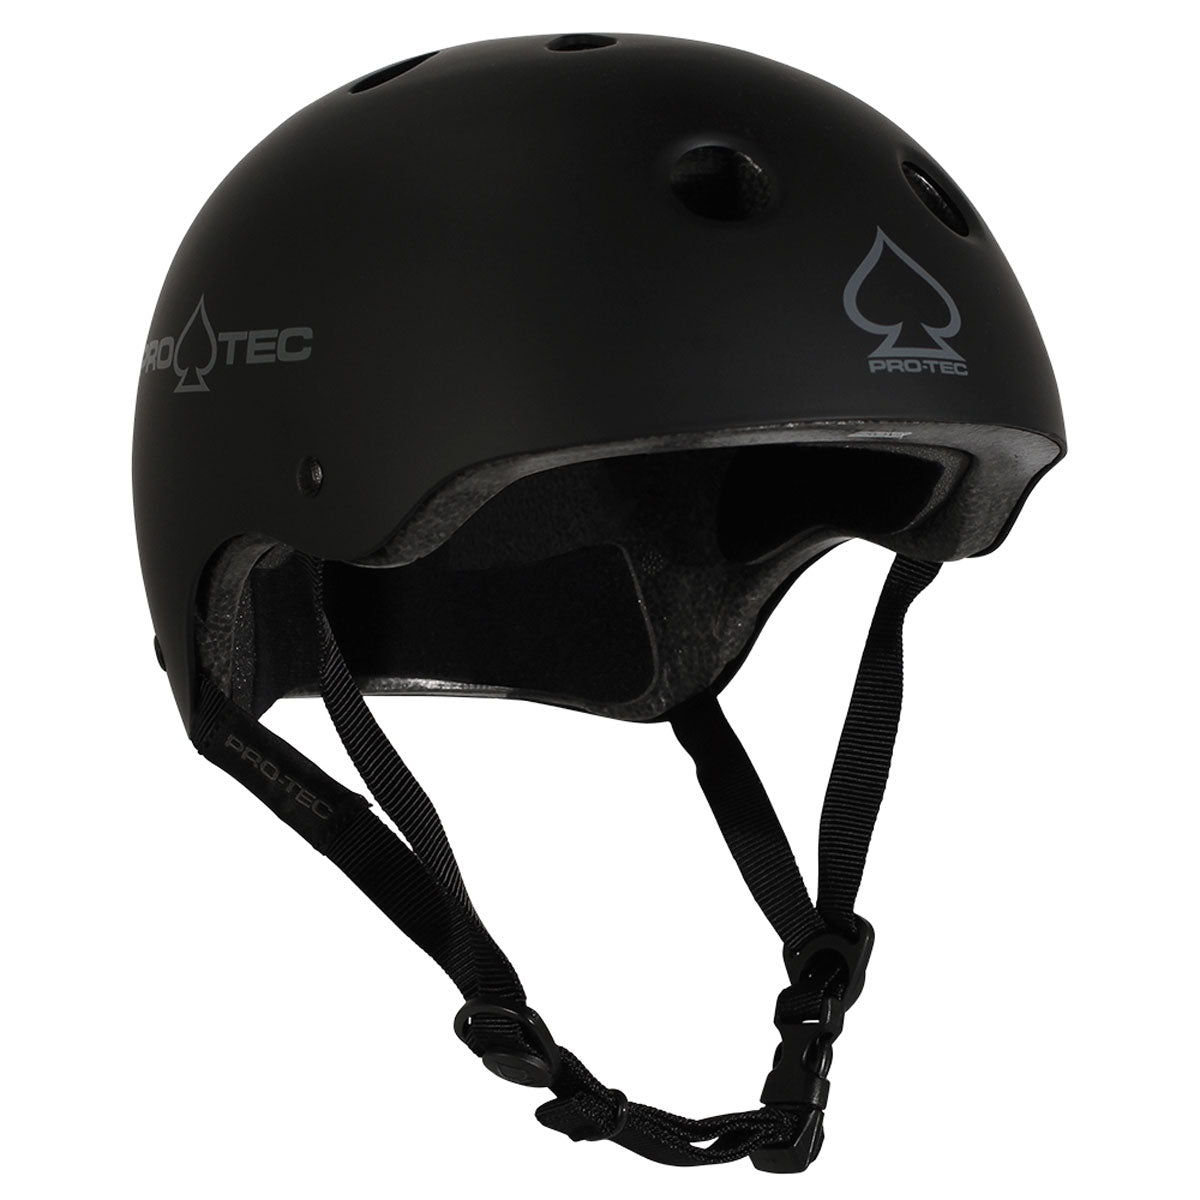 Pro Tec Classic Certified Helmet - Matte Black image 1